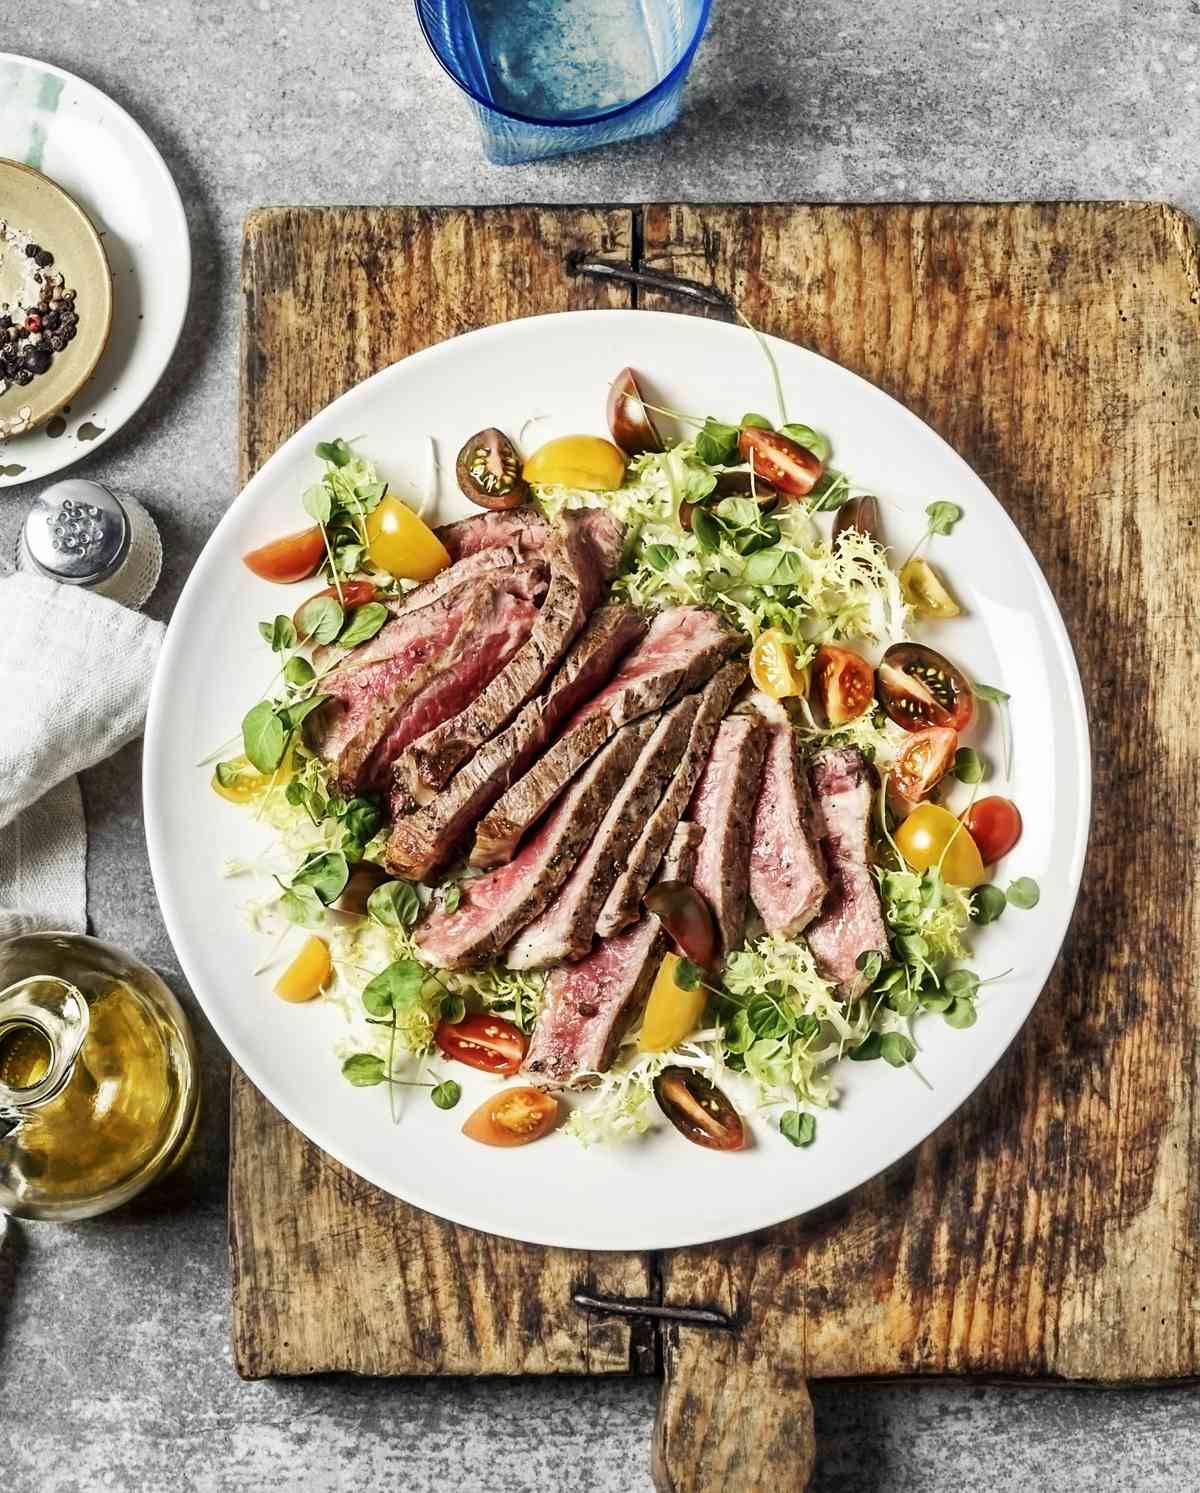 Steak with fresh salad